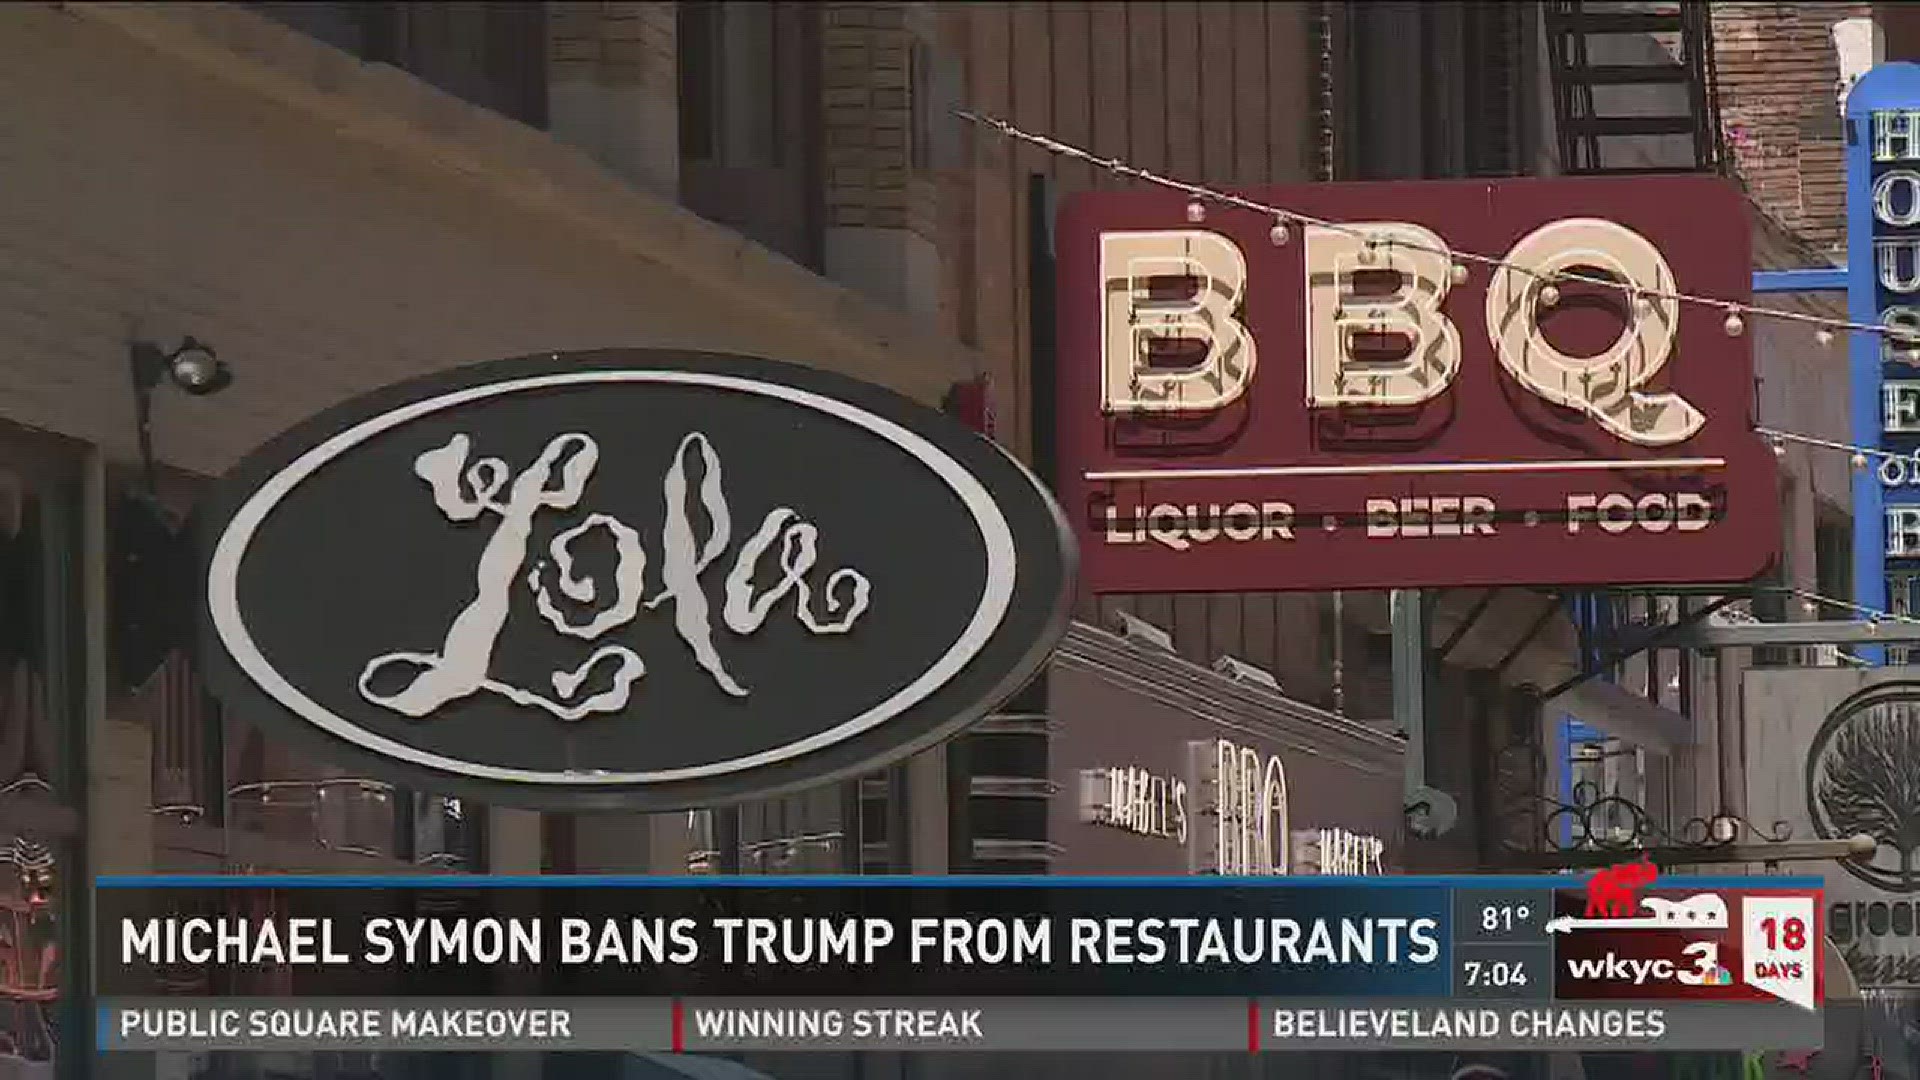 Michael Symon bans Trump from restaurants